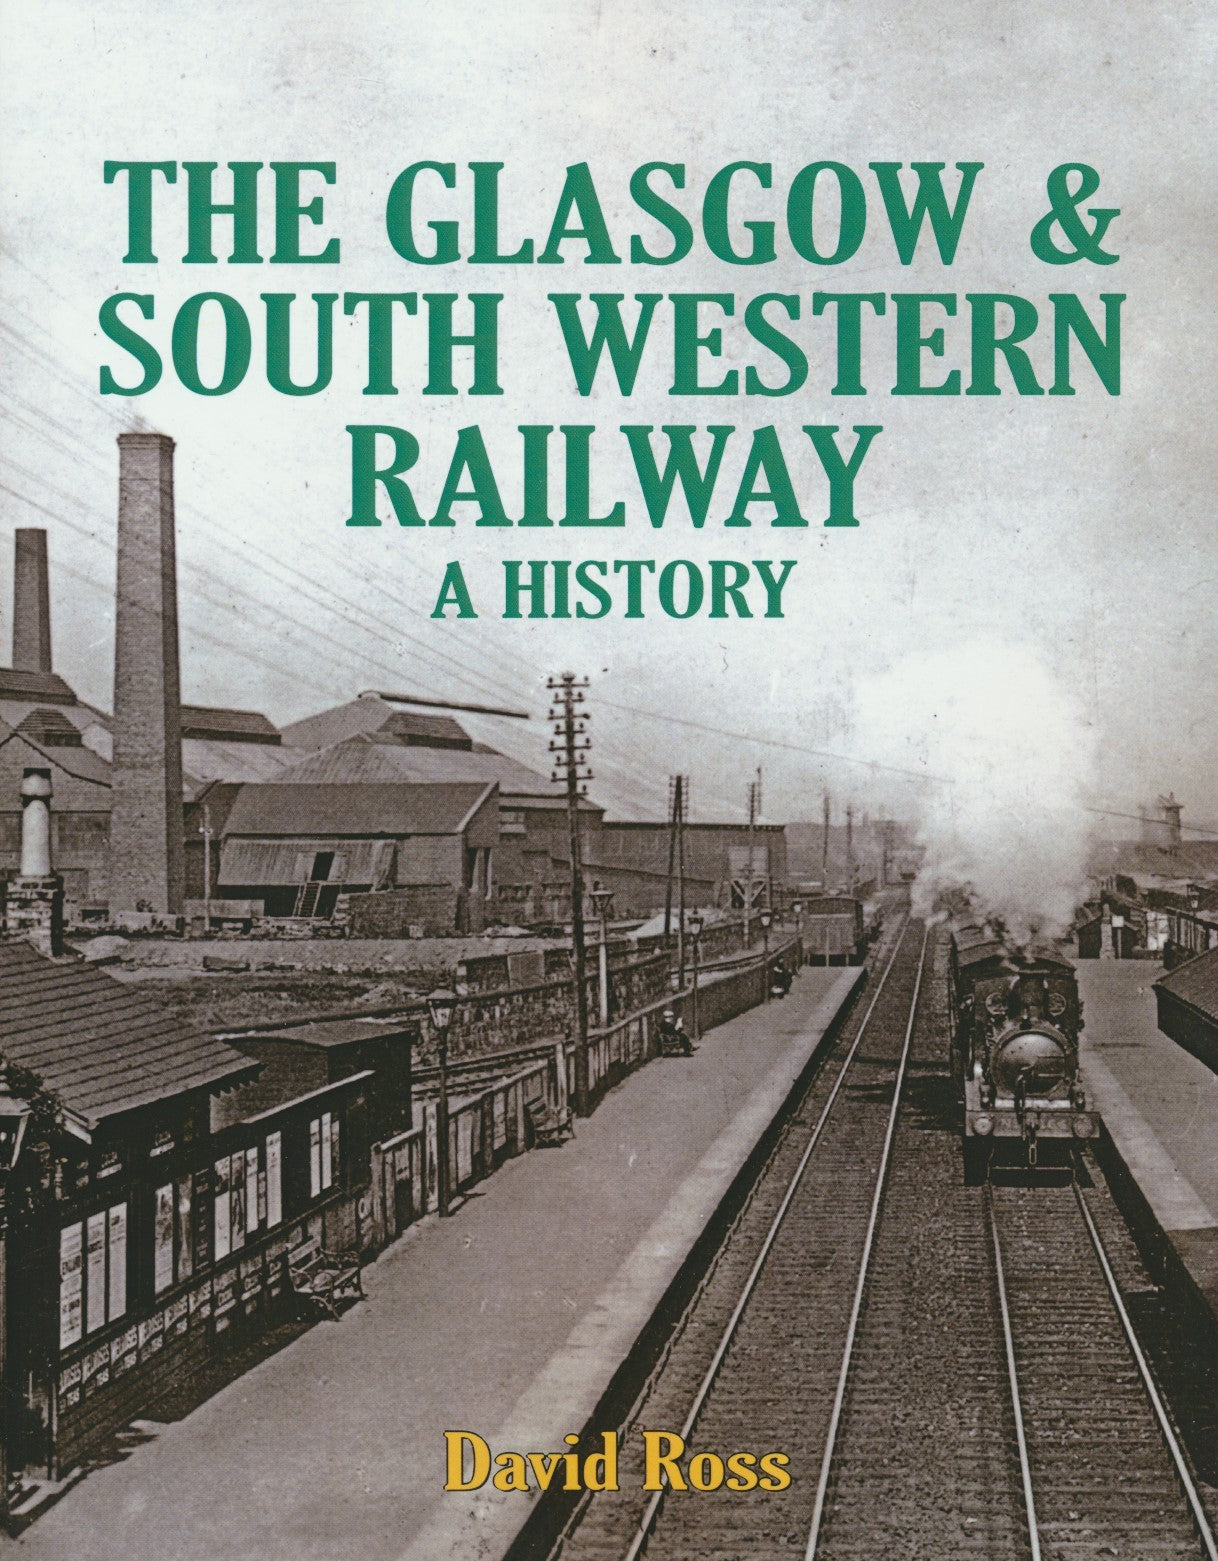 The Glasgow & South Western Railway: A History